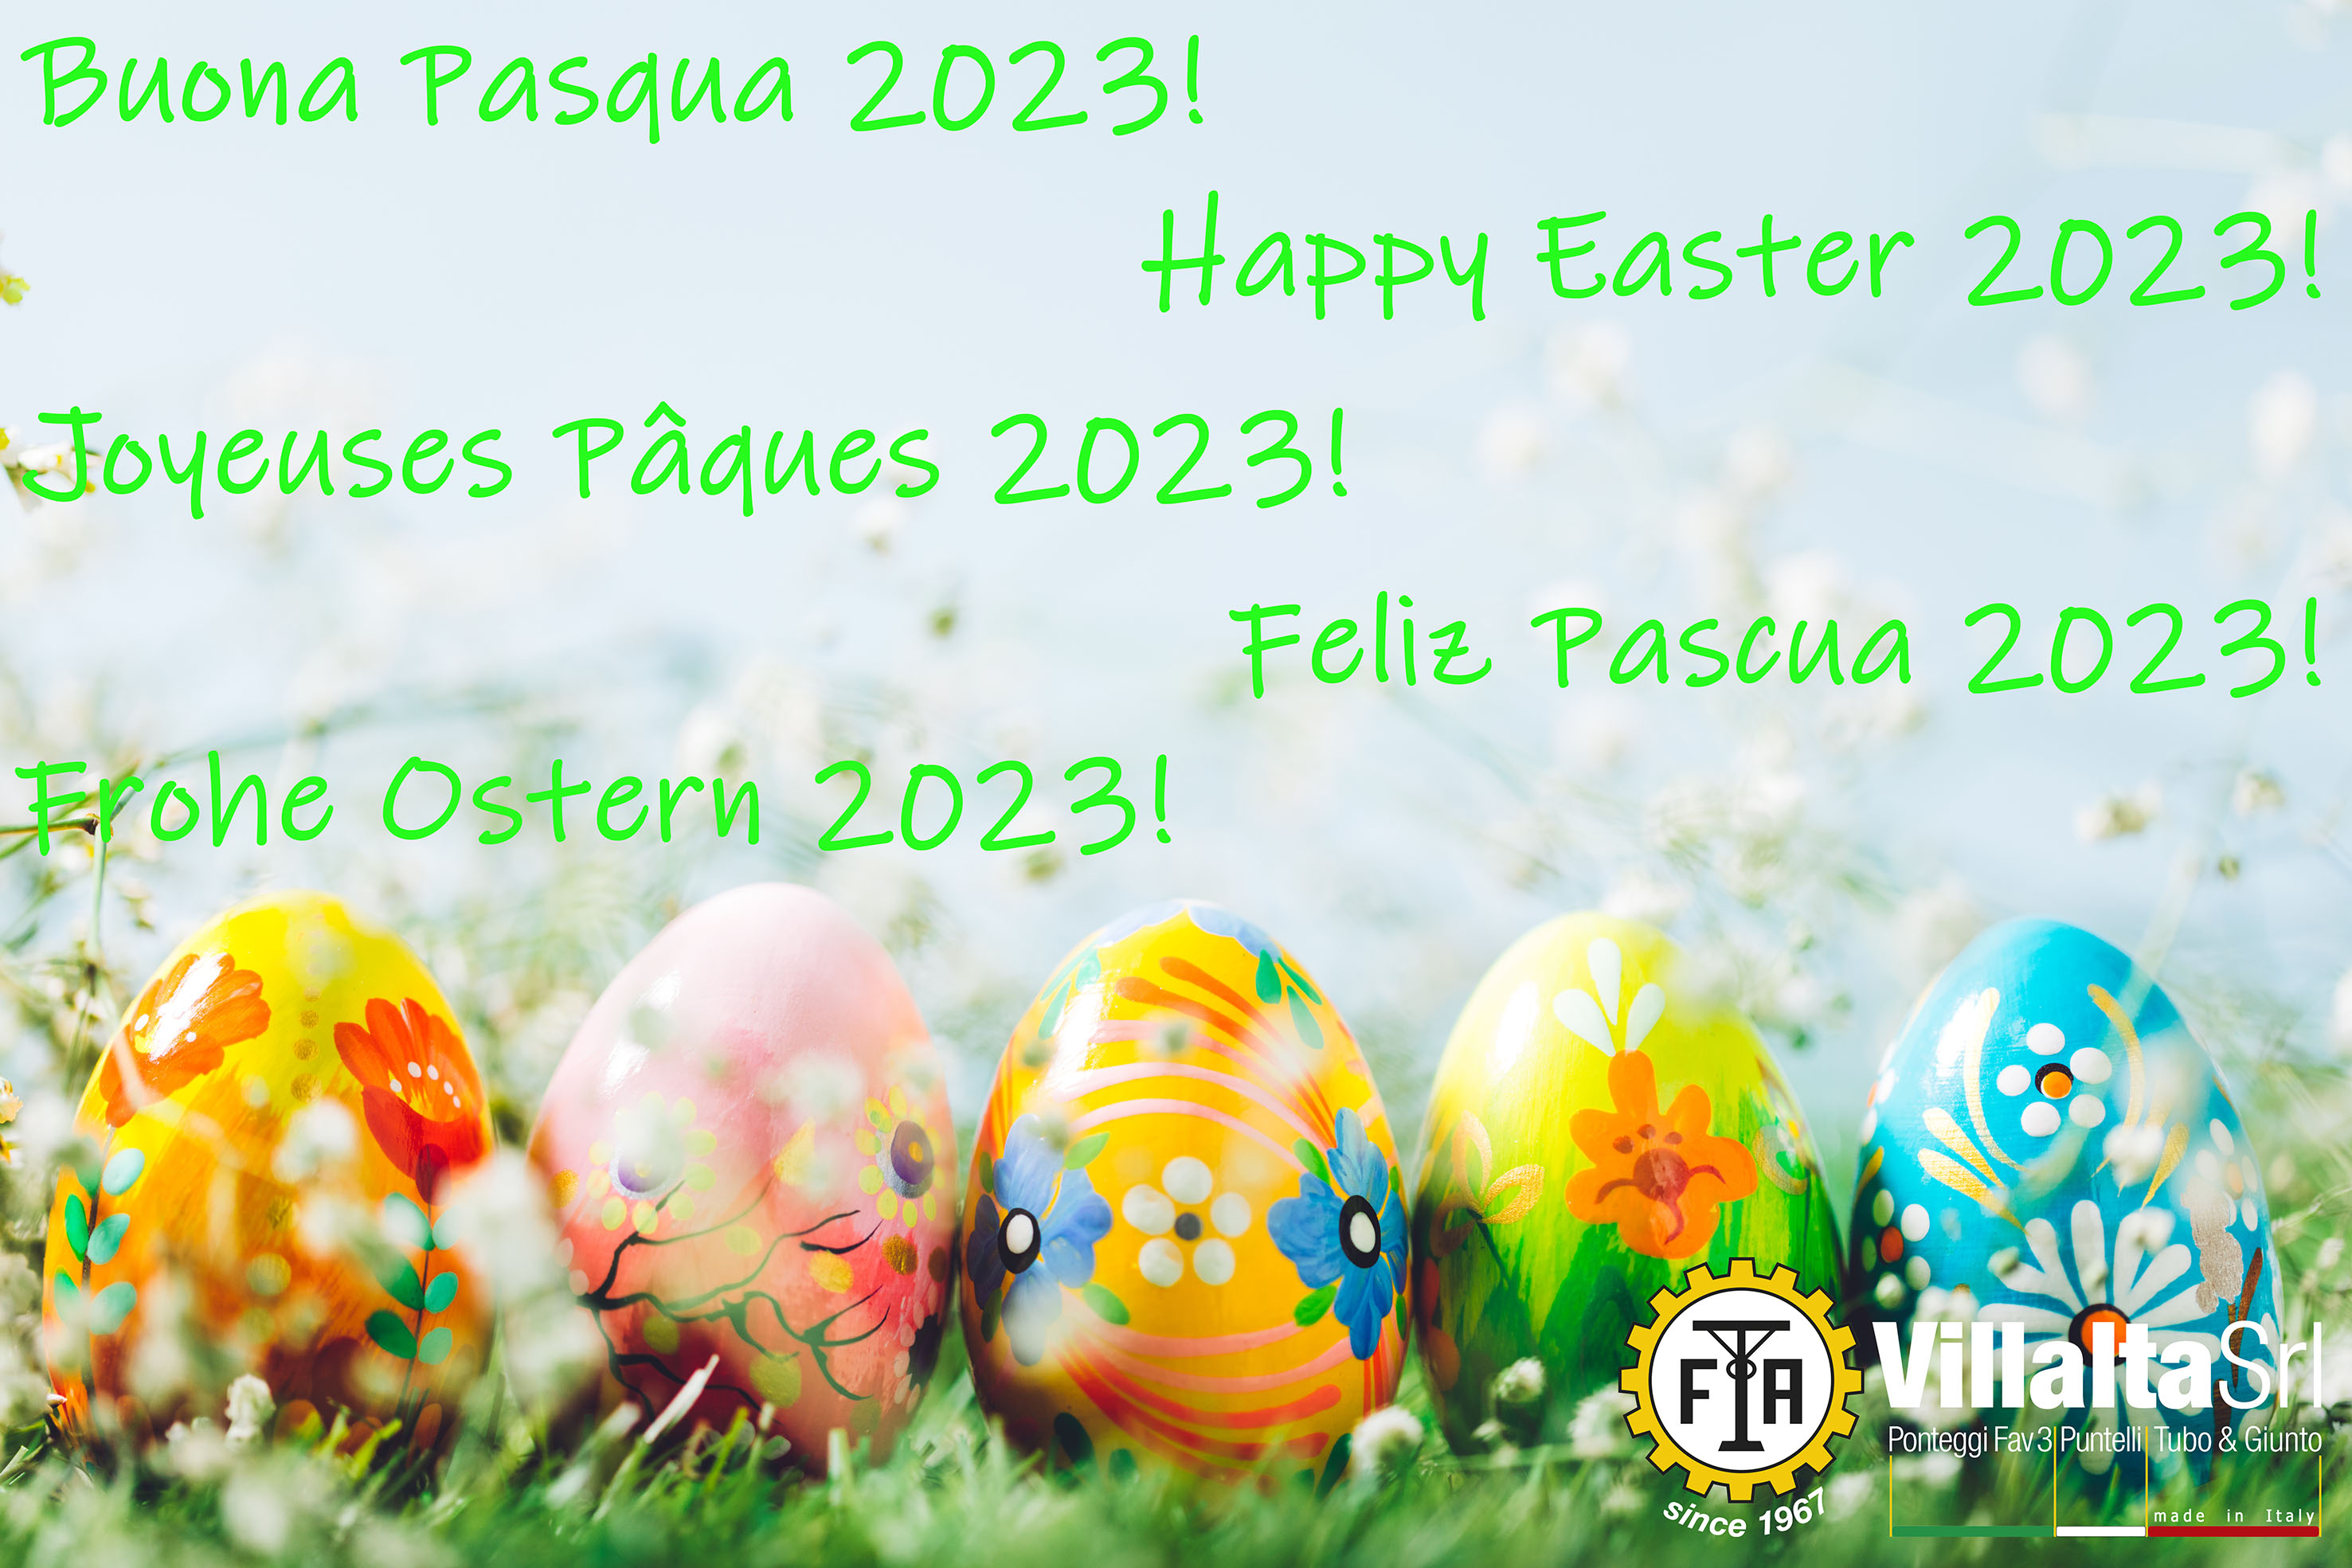 Pasqua 2023 Easter Villalta srl